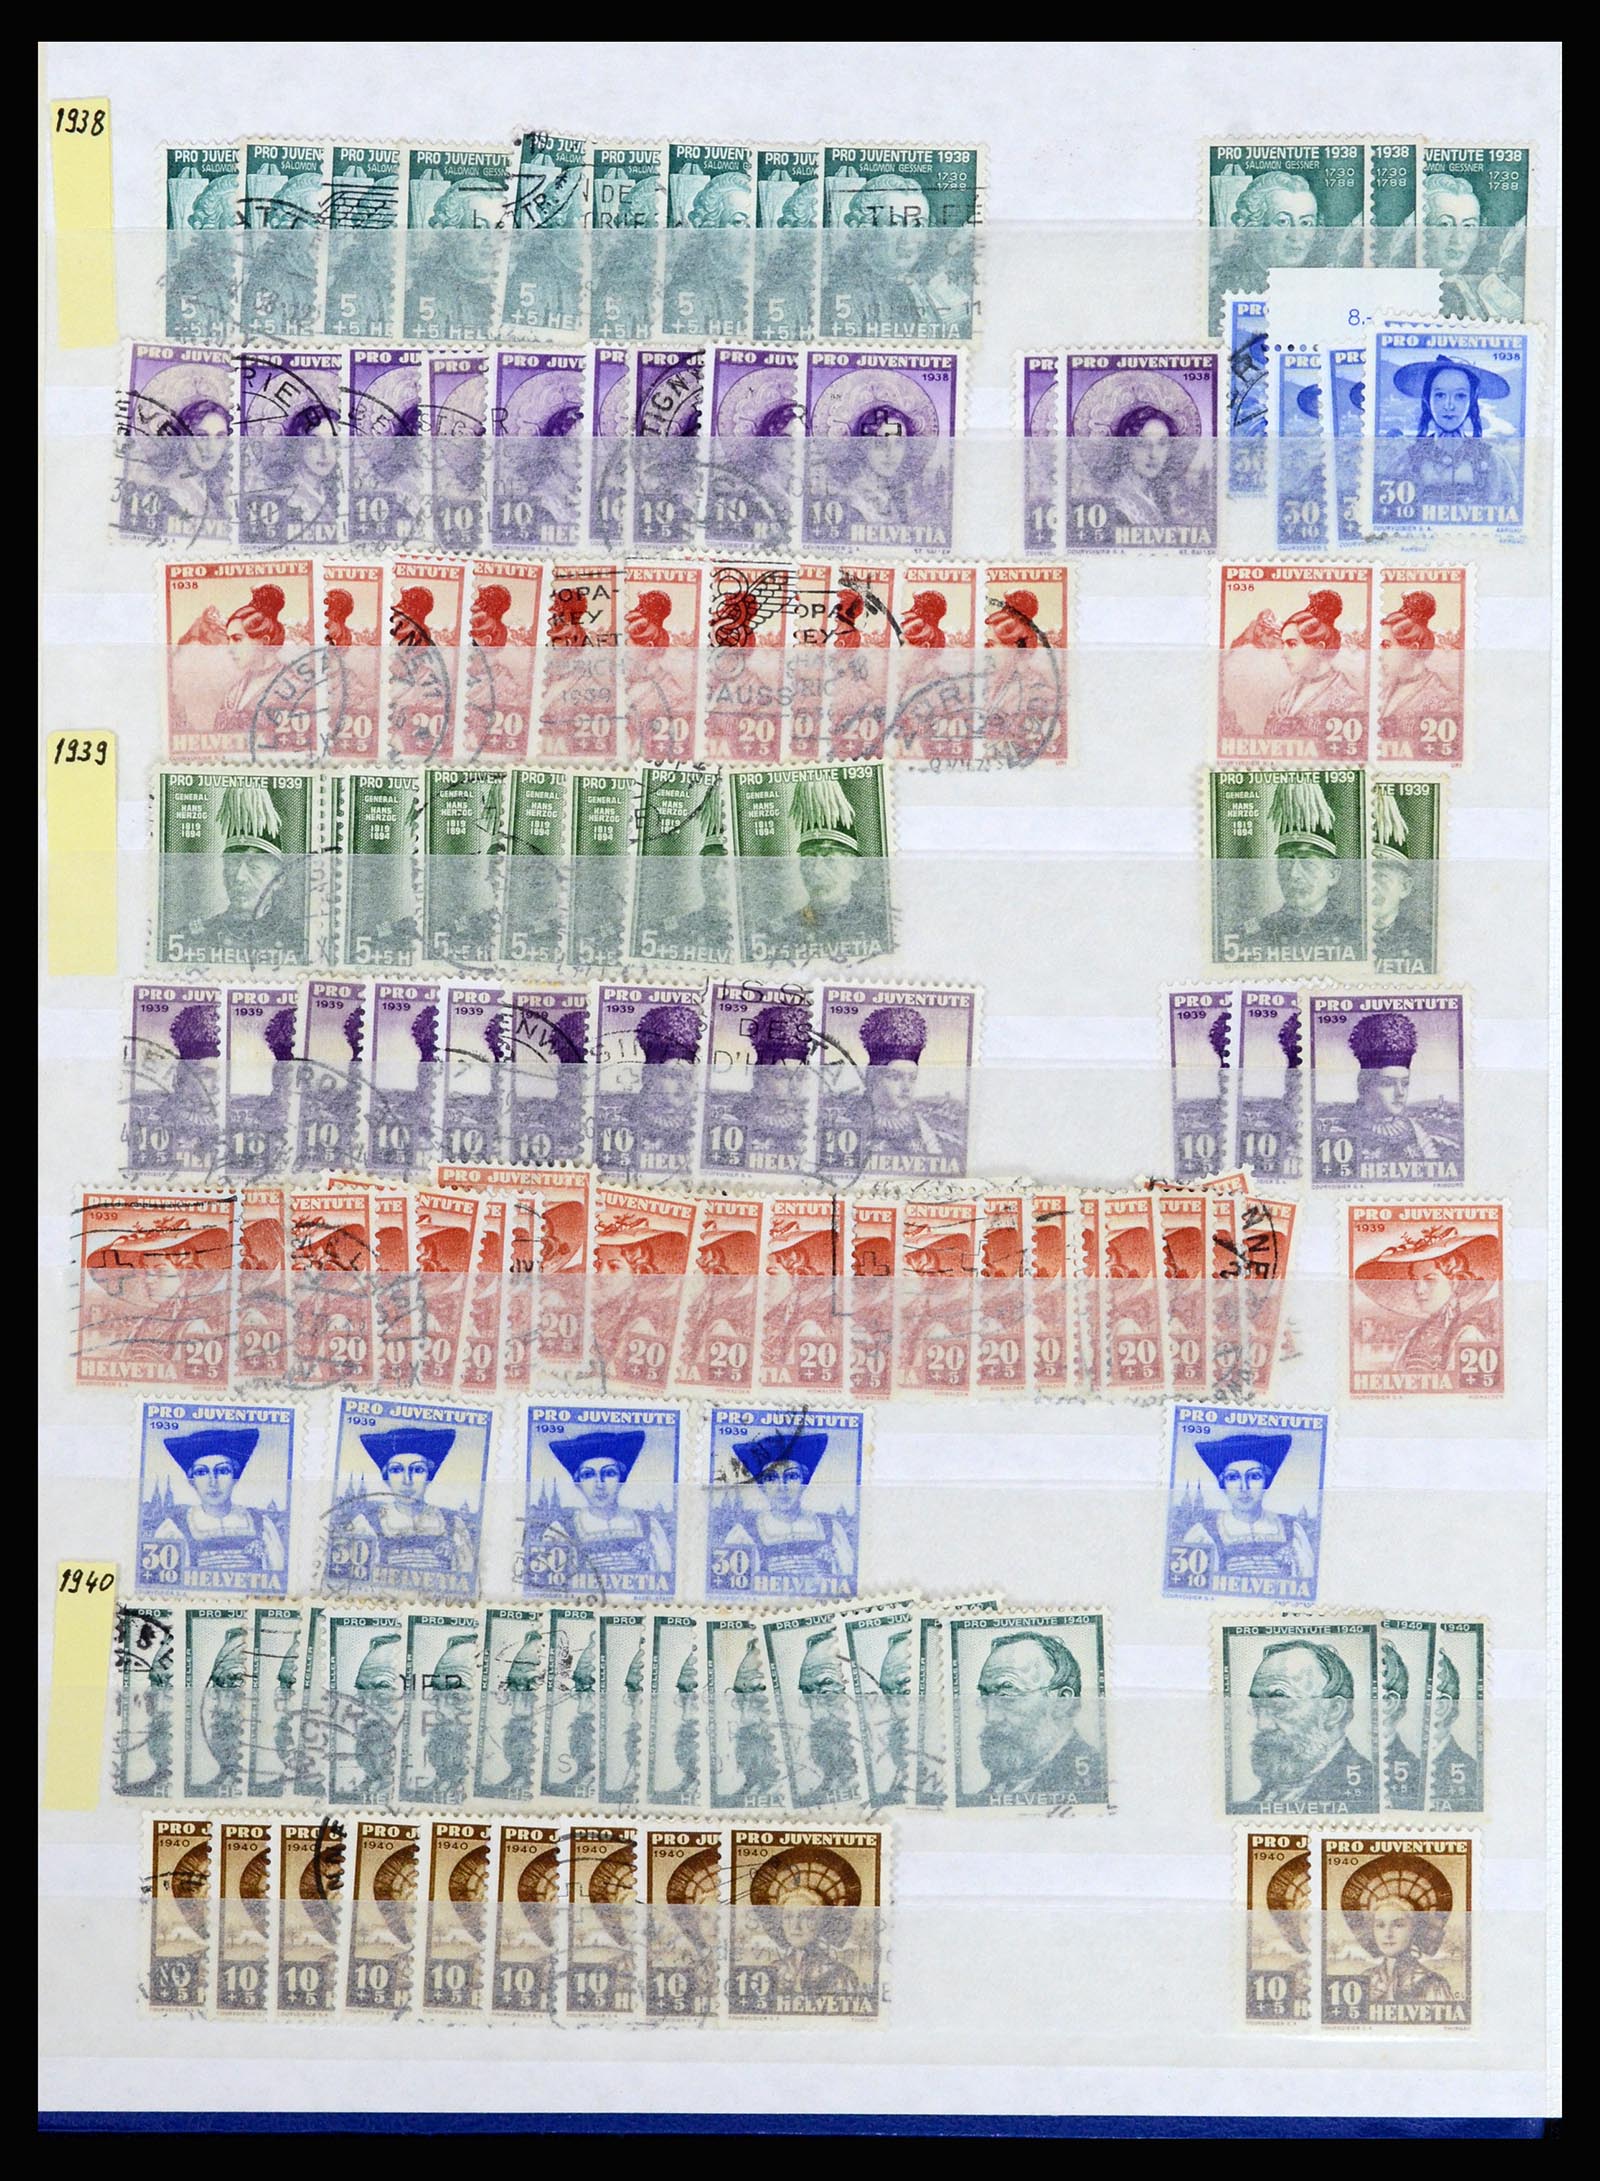 37061 006 - Stamp collection 37061 Switzerland 1913-2000.